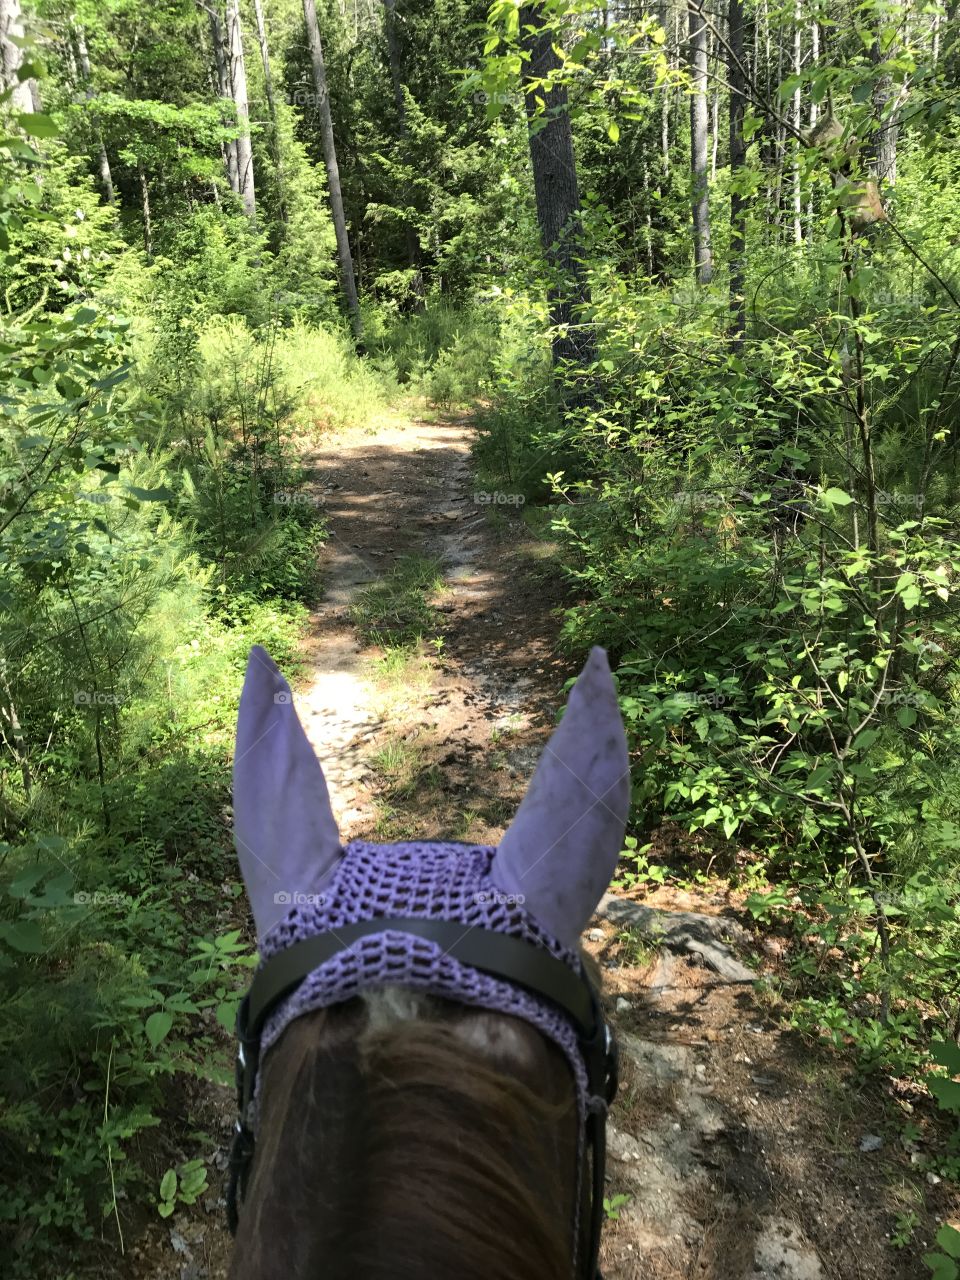 Trail ride